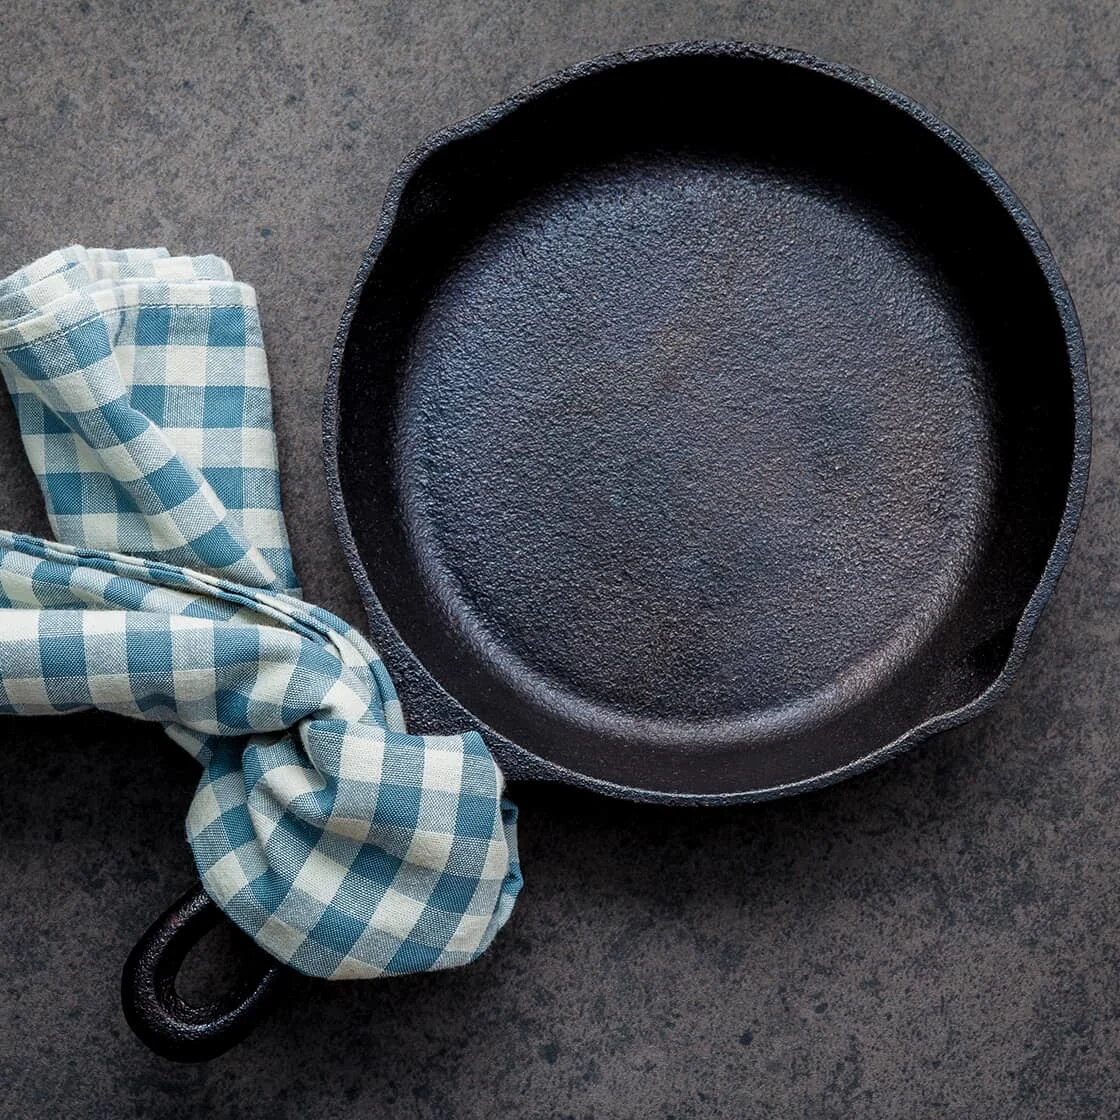 Clean cast iron pan